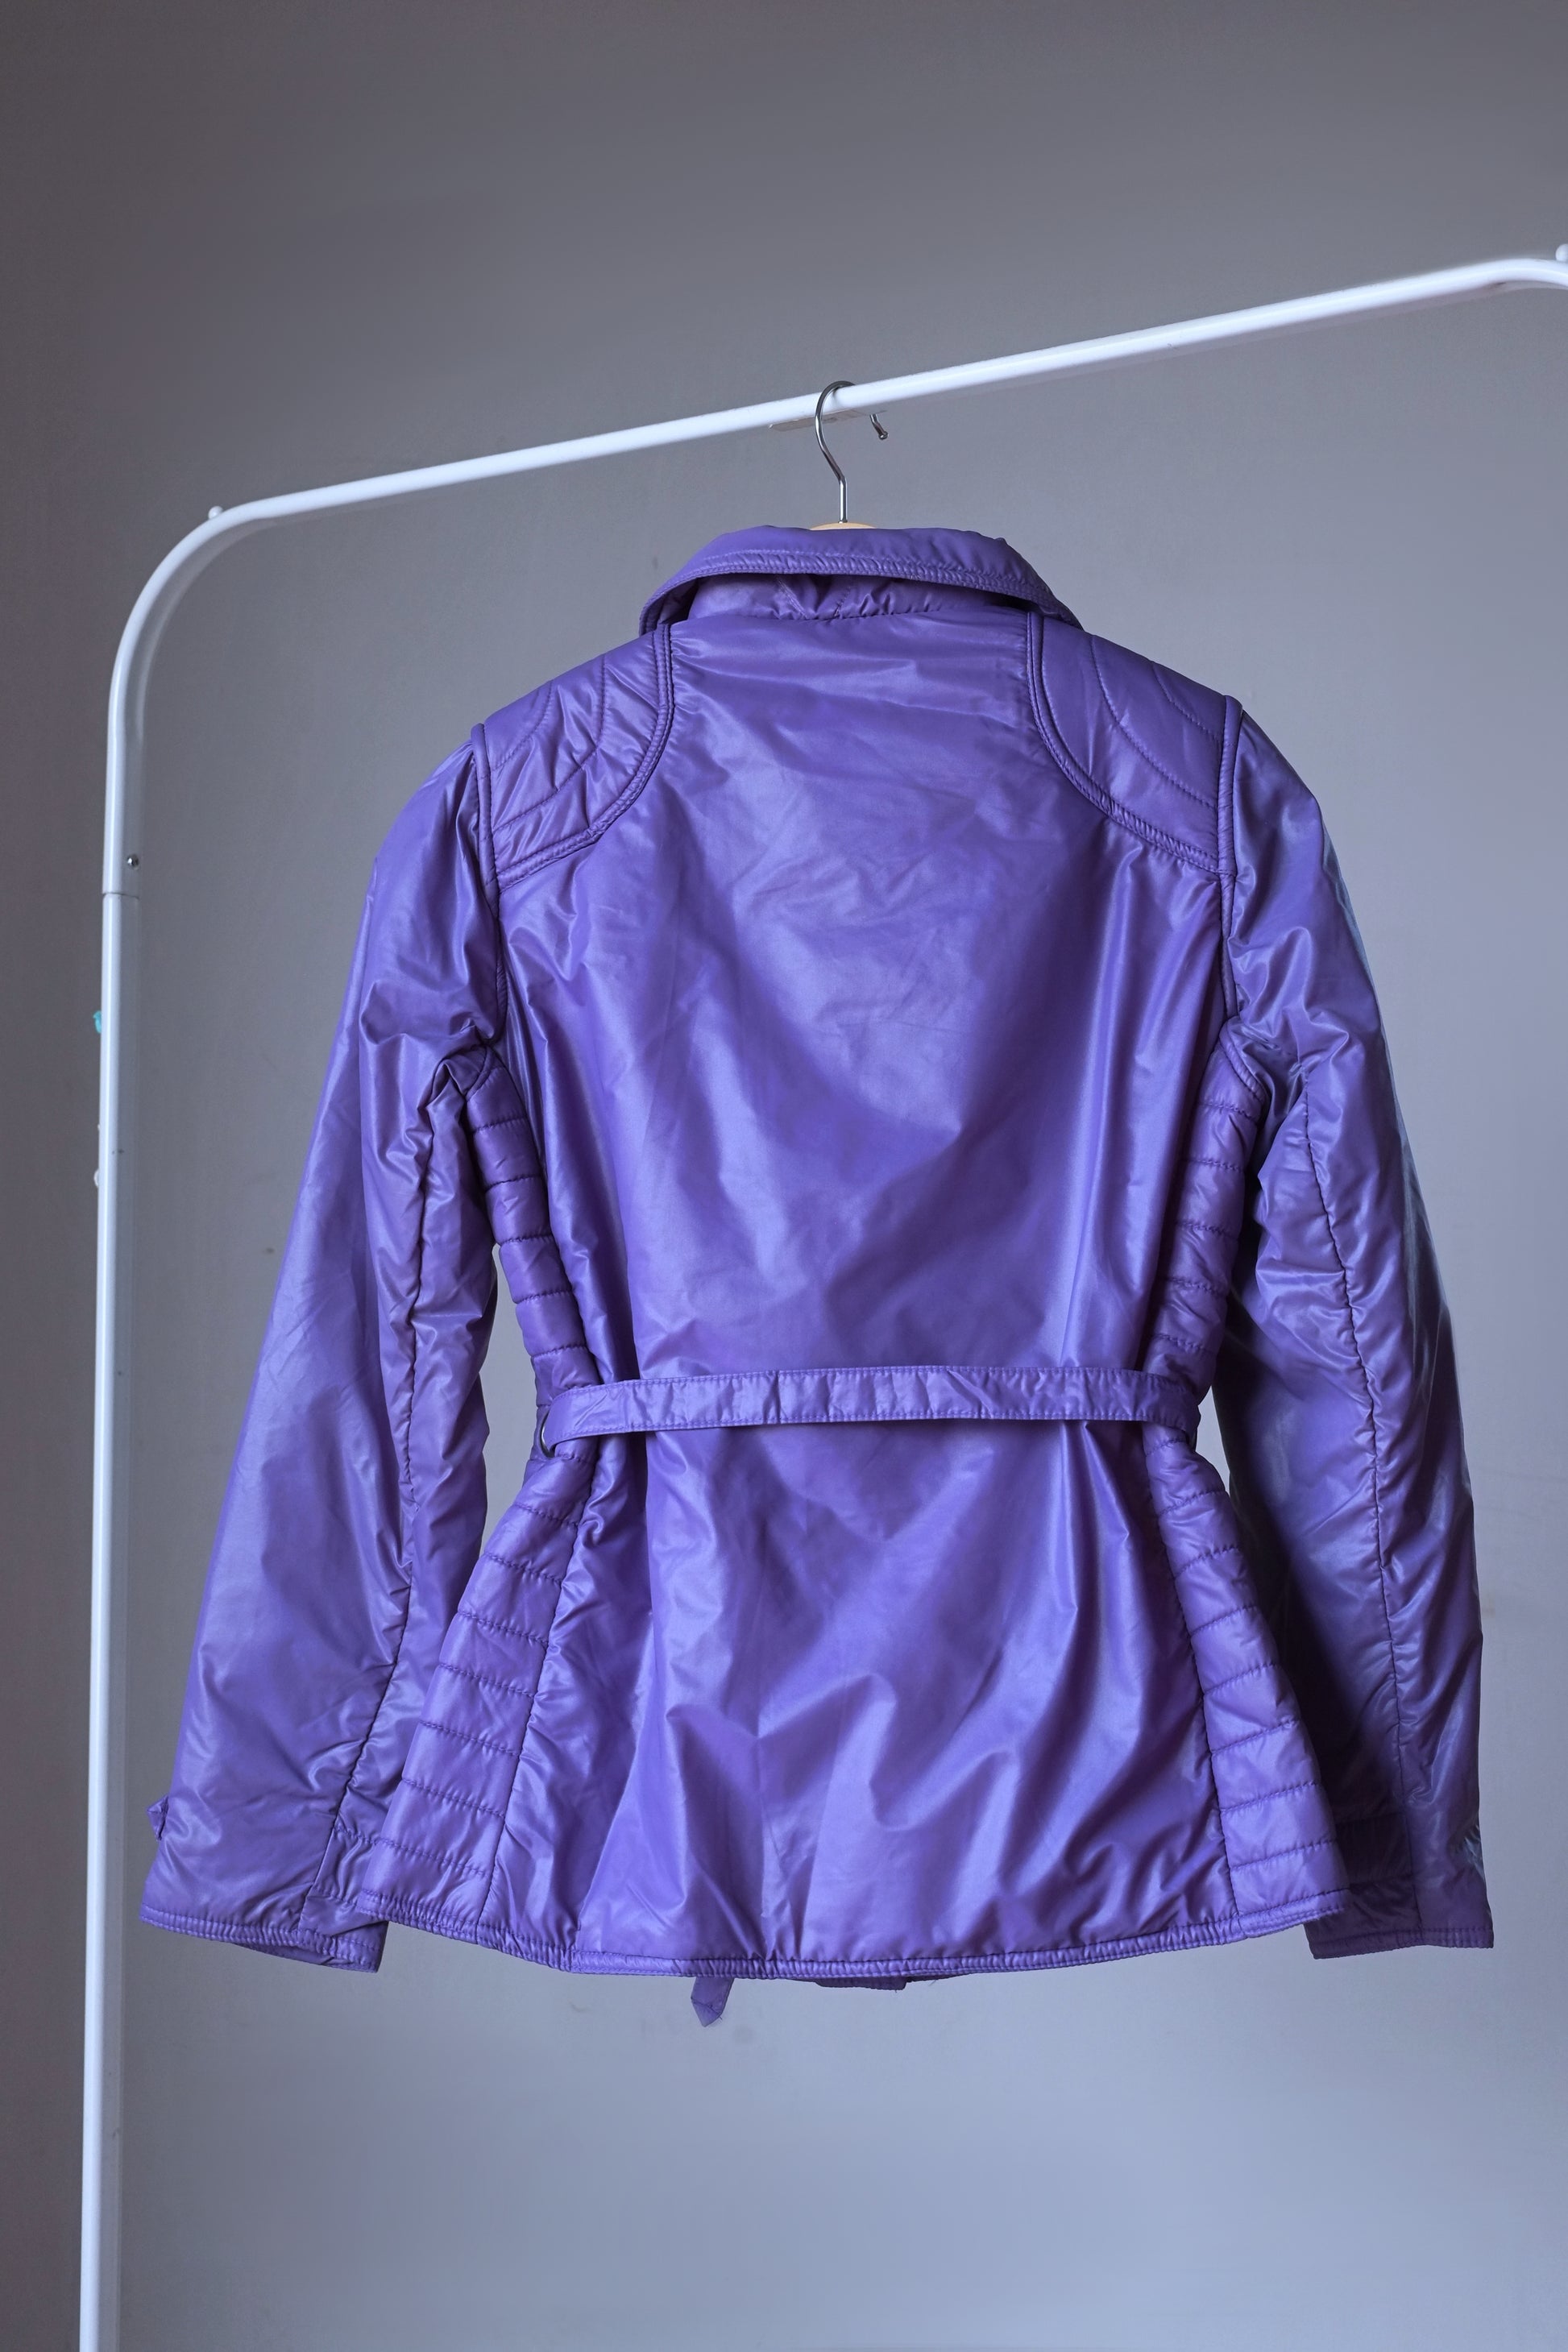 Back view of purple mossant 70s vintage women ski jacket on hanger